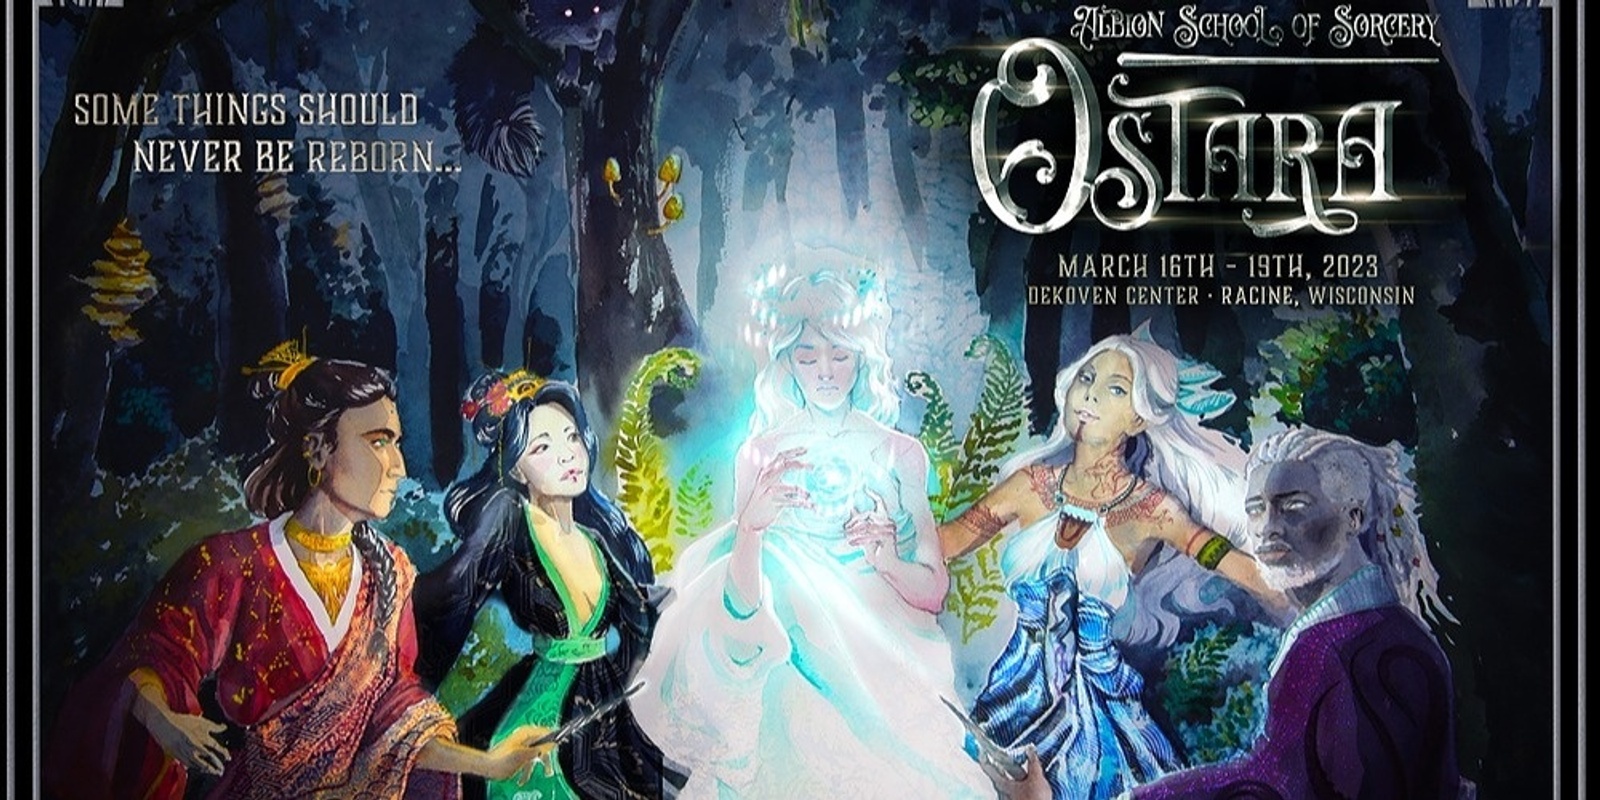 Banner image for Albion School of Sorcery: Ostara